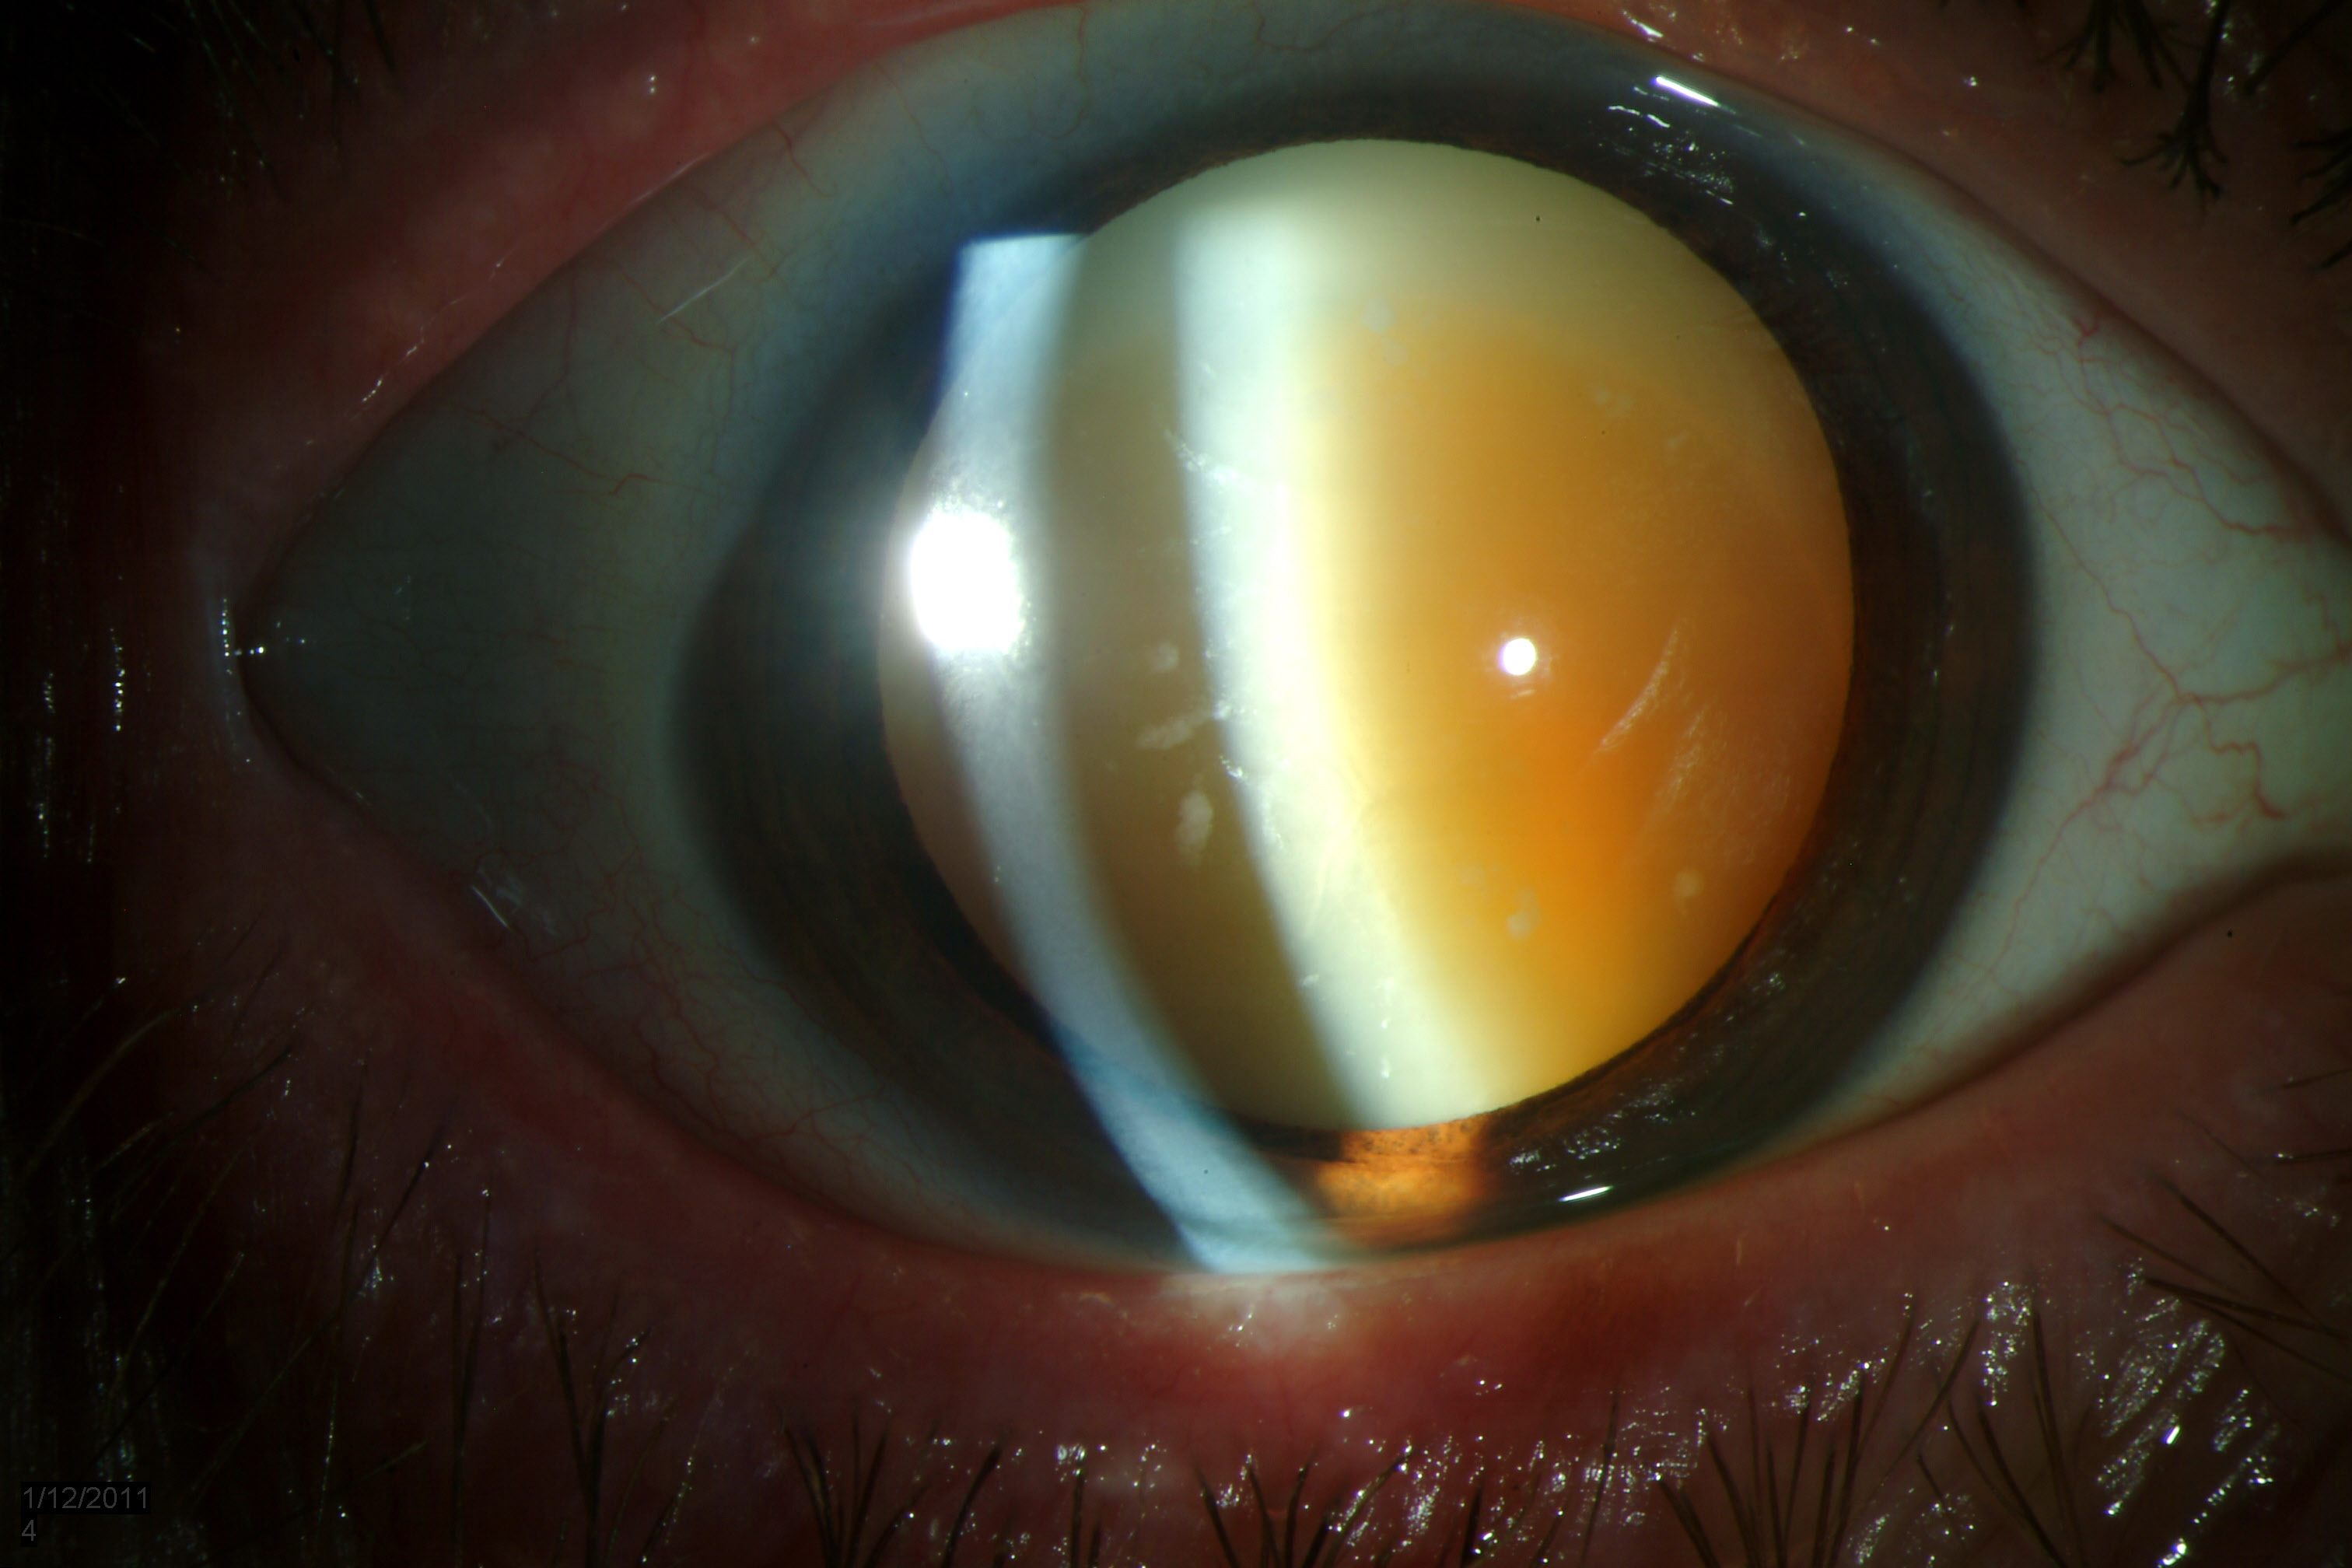 Morgagnian Cataract. EyeRounds.org - Ophthalmology - The University of Iowa